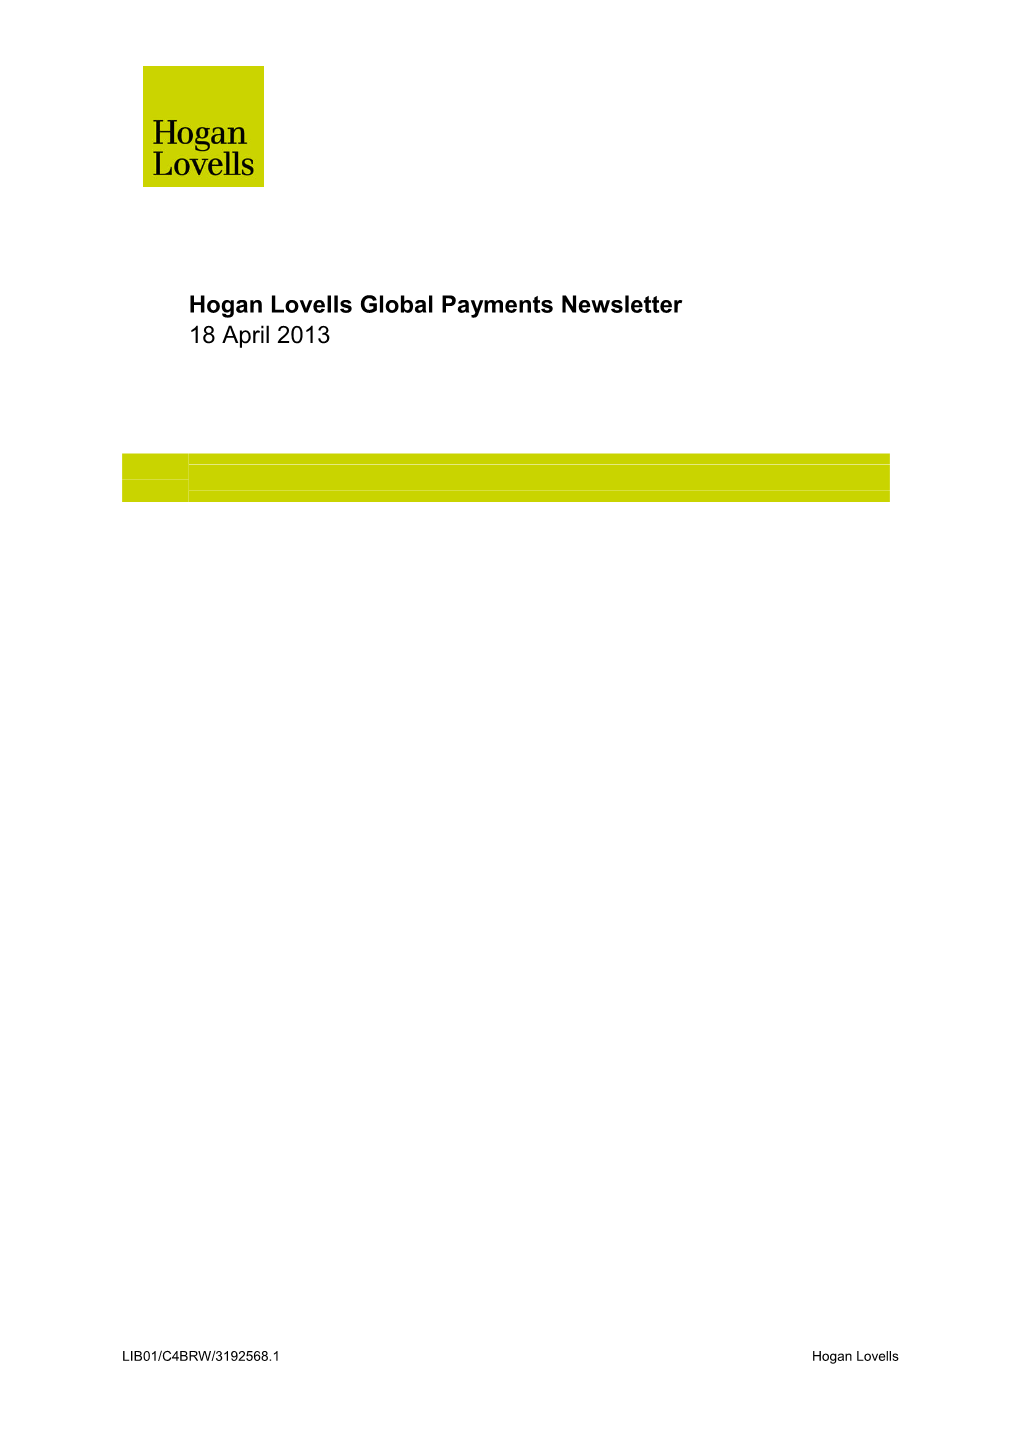 Hogan Lovells Global Payments Newsletter 18 April 2013